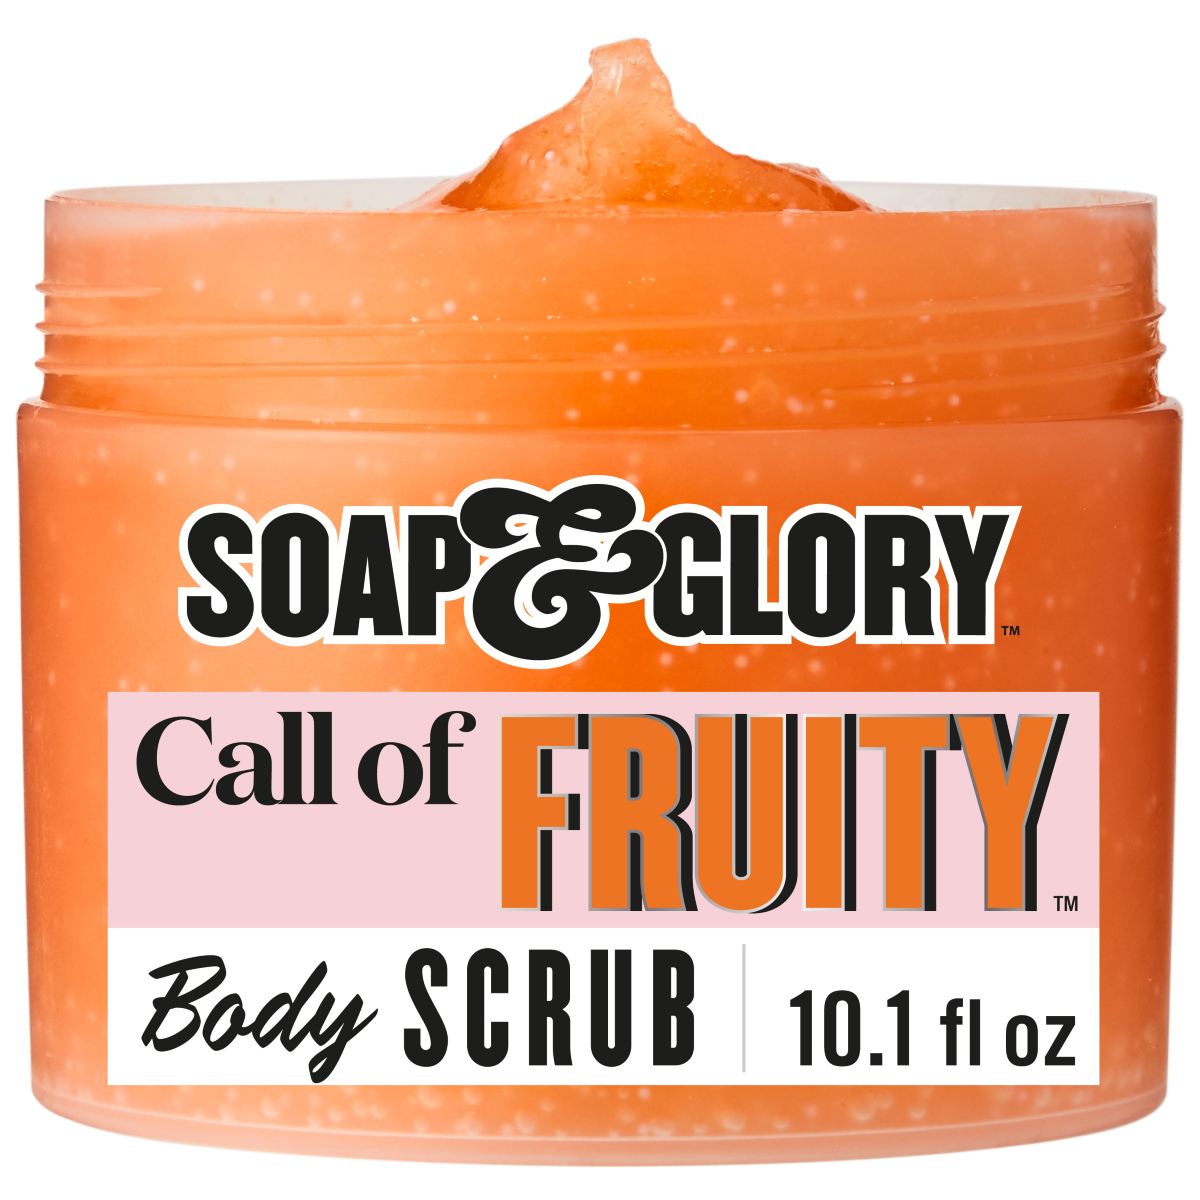 Call Of Fruity Exfoliating Body Scrub